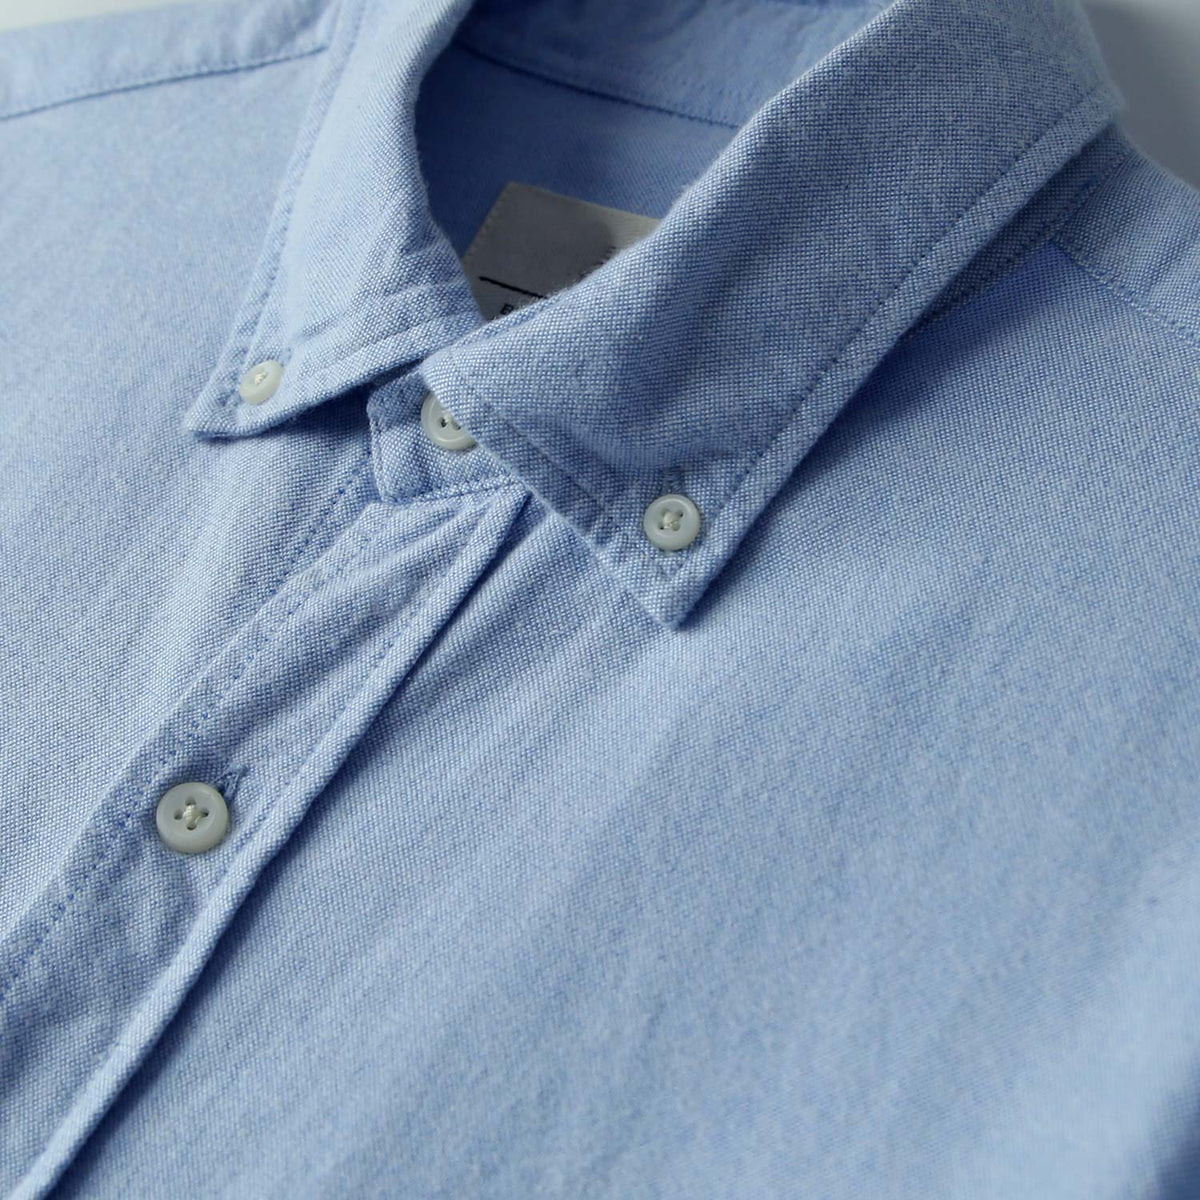 Men Premium Quality Long Sleeve Slim Fit Signature Casual Shirt